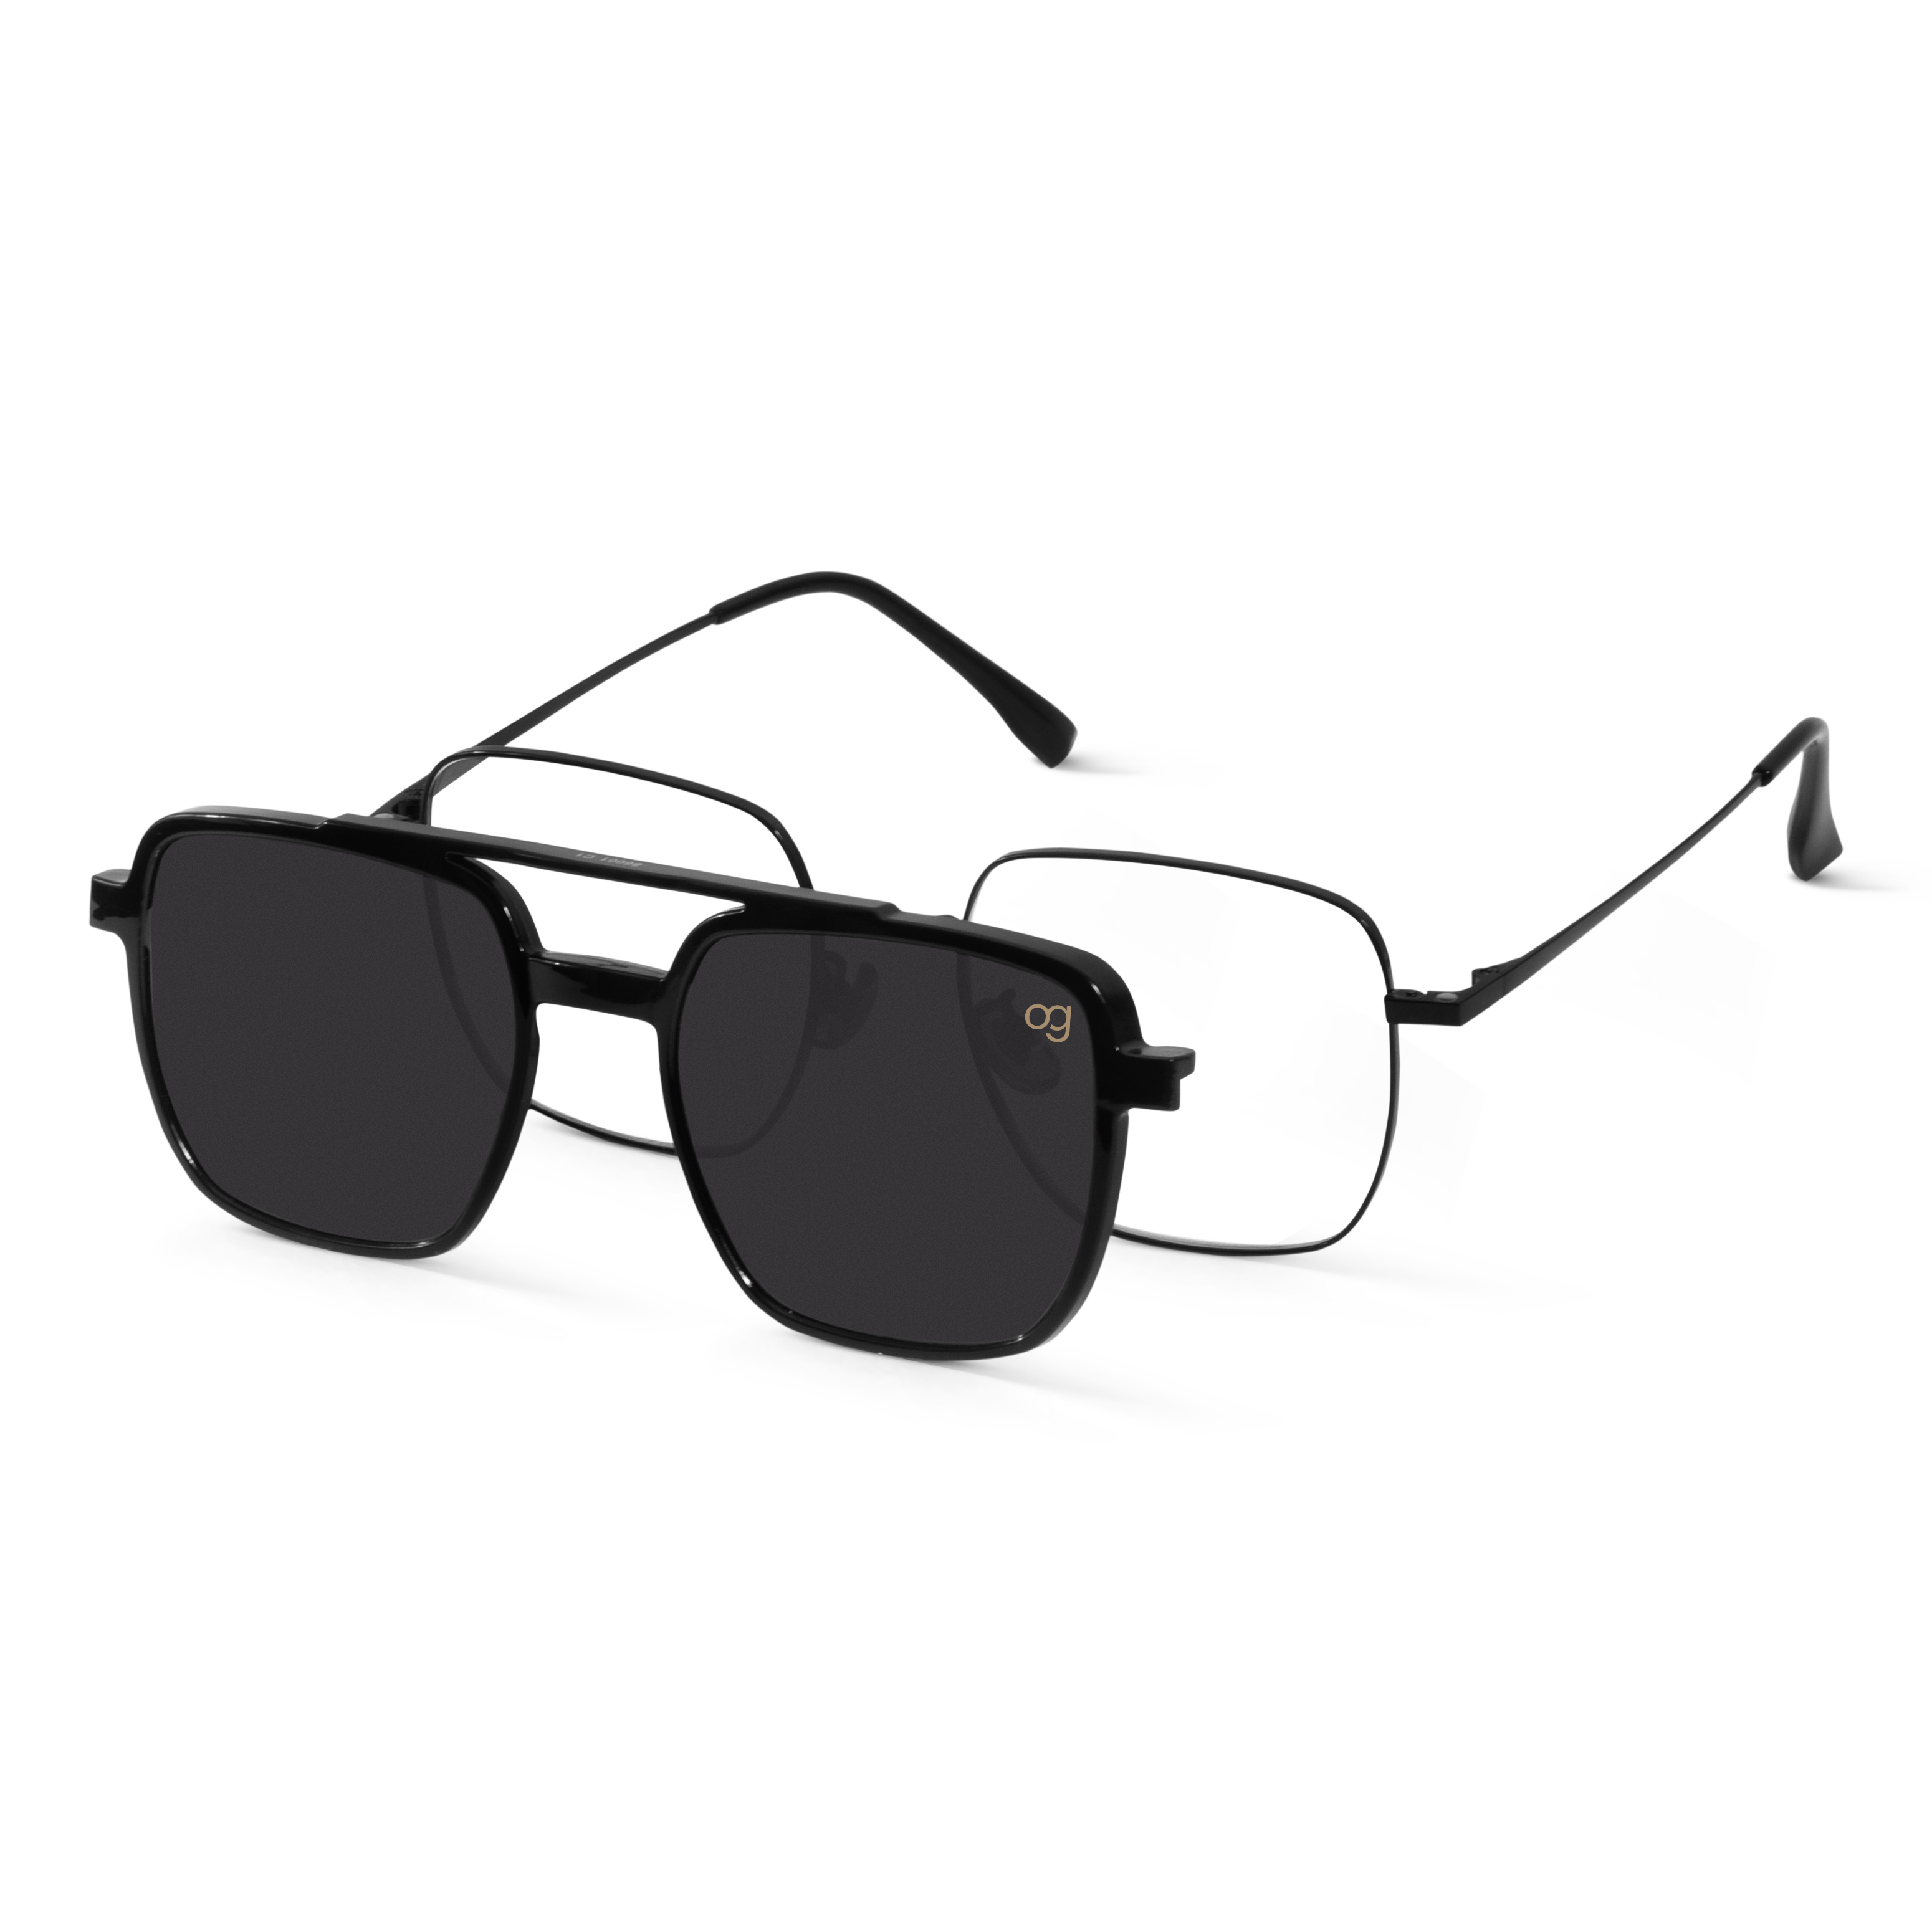 Buy Clip On Sunglasses For Men - 2 Sunglasses @999 - Woggles